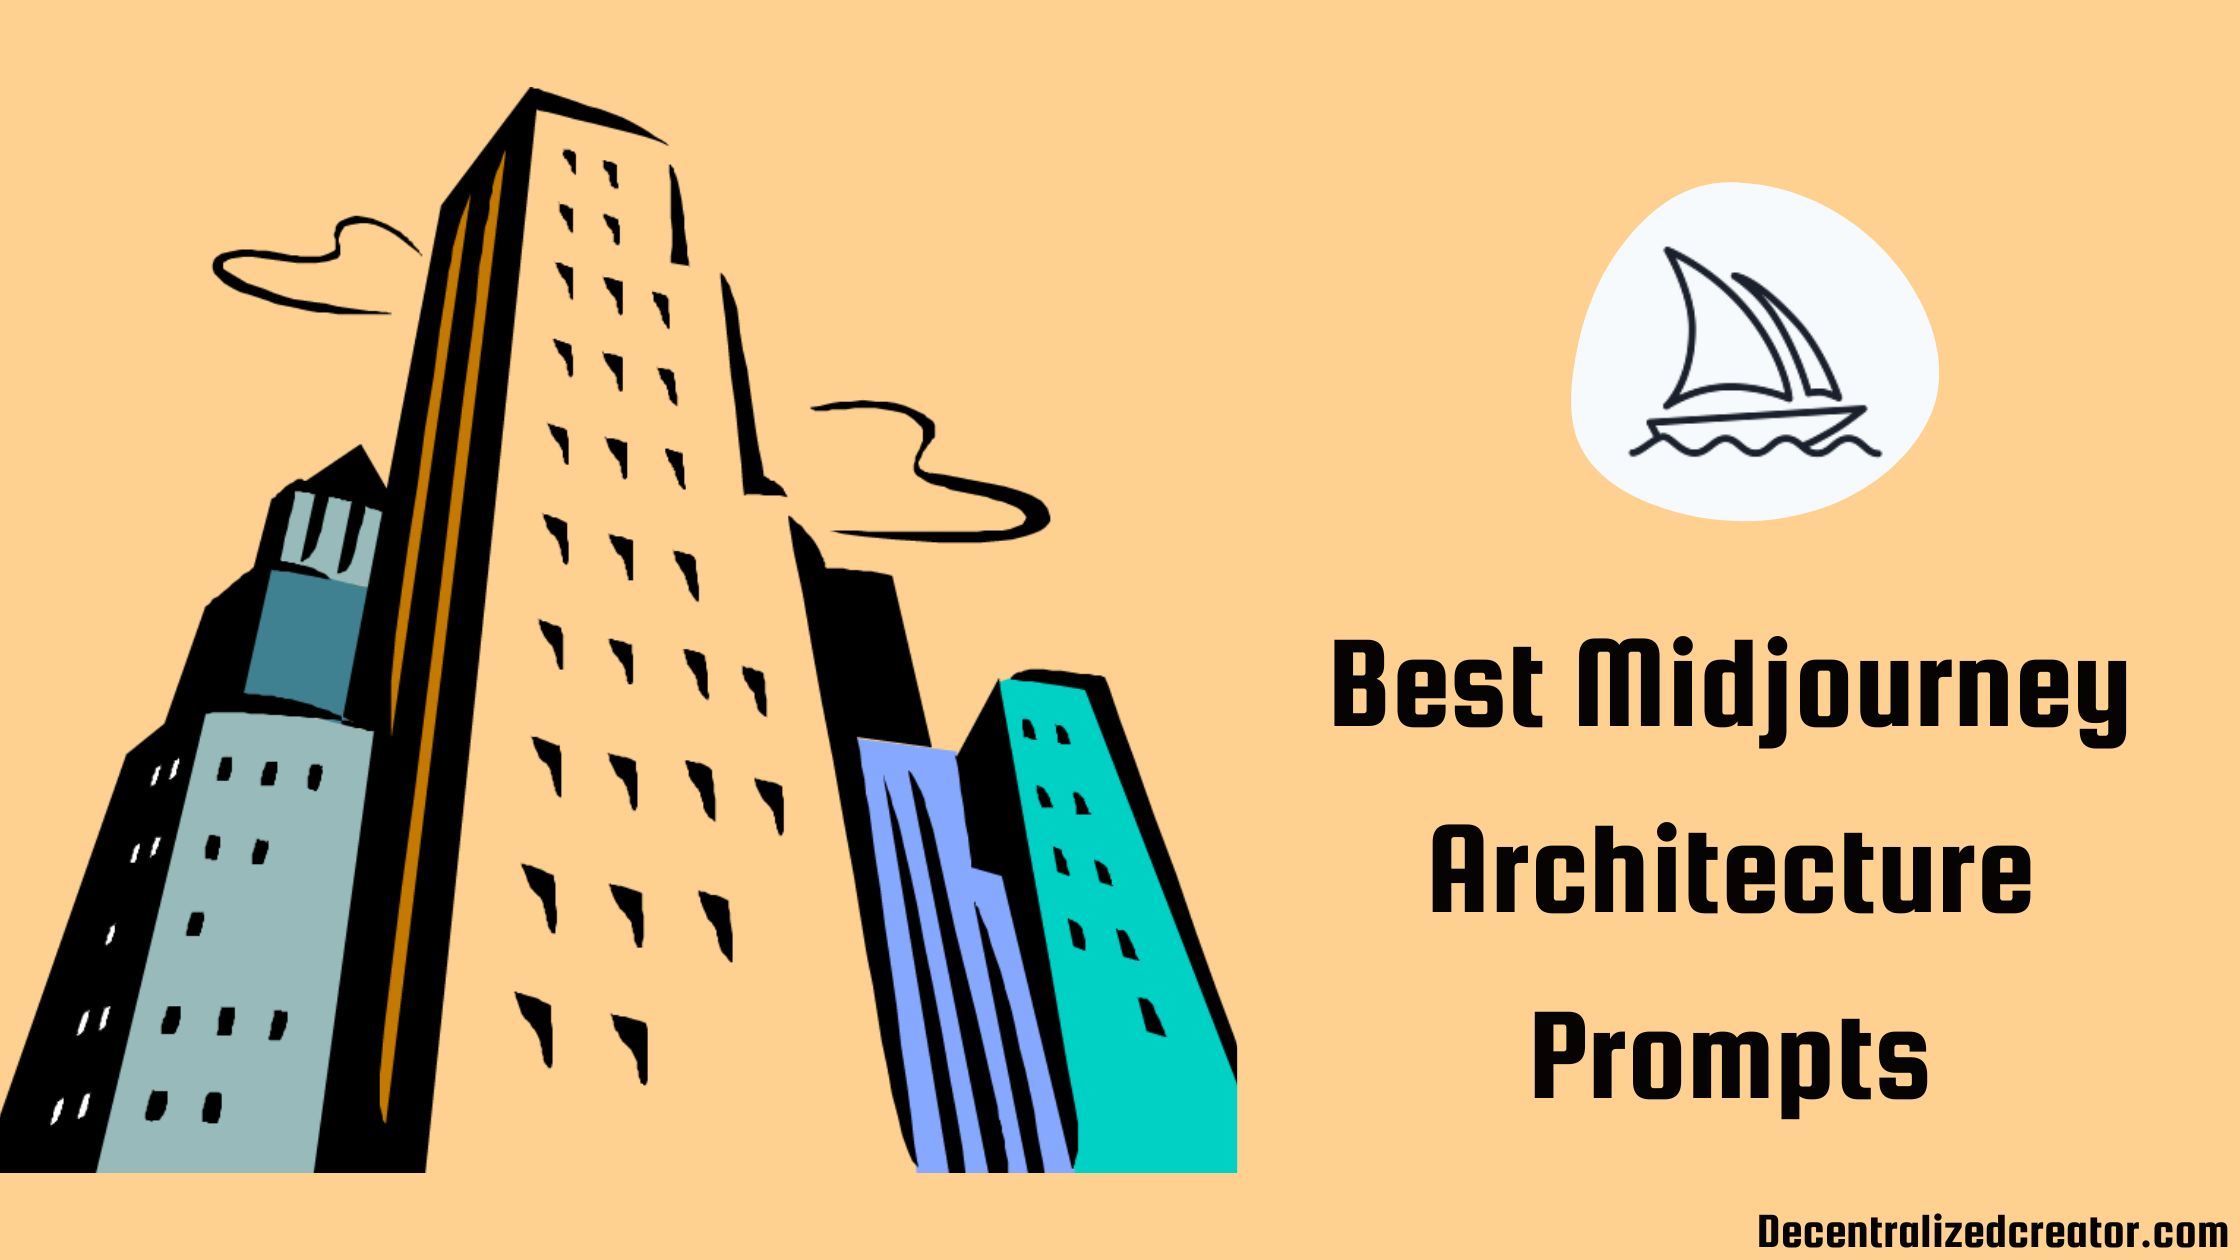 Best Midjourney Architecture Prompts